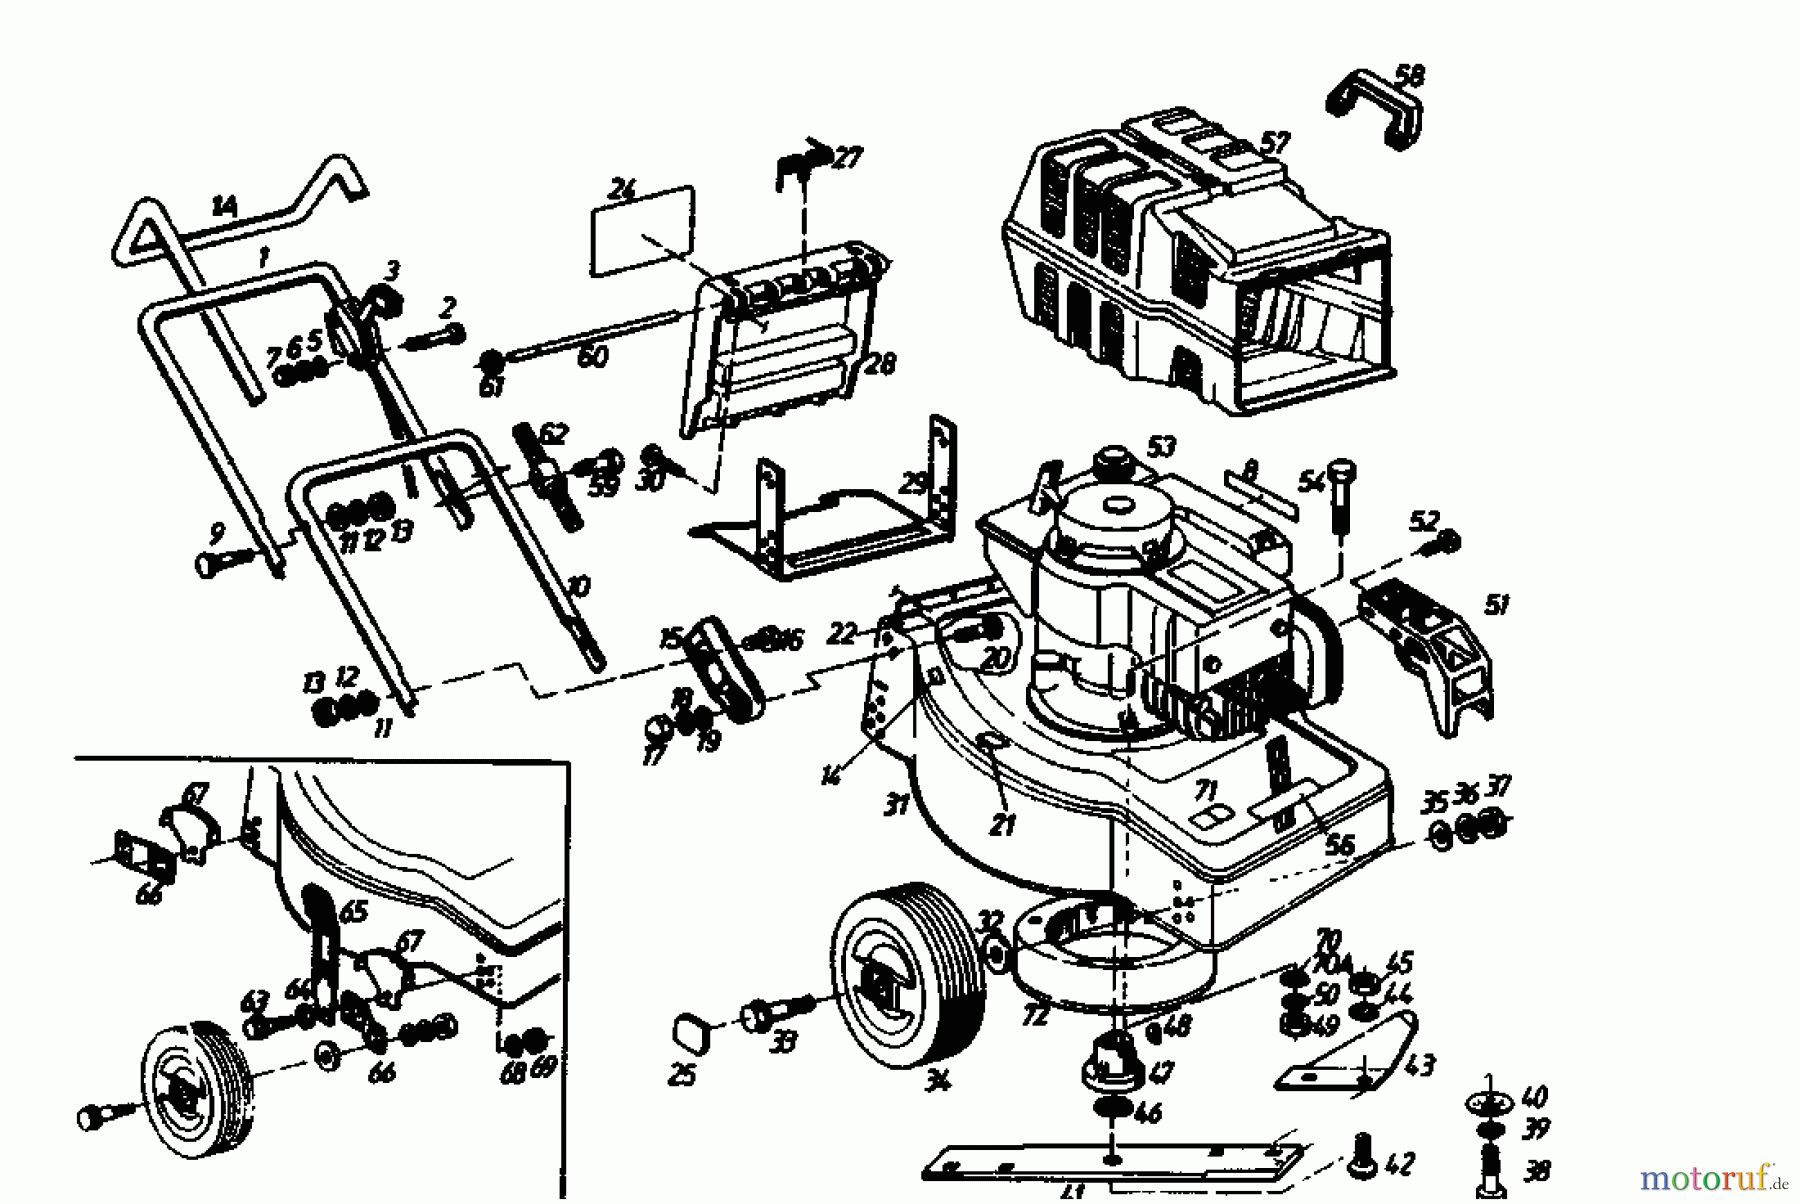  Golf Petrol mower B 02880.01  (1989) Basic machine